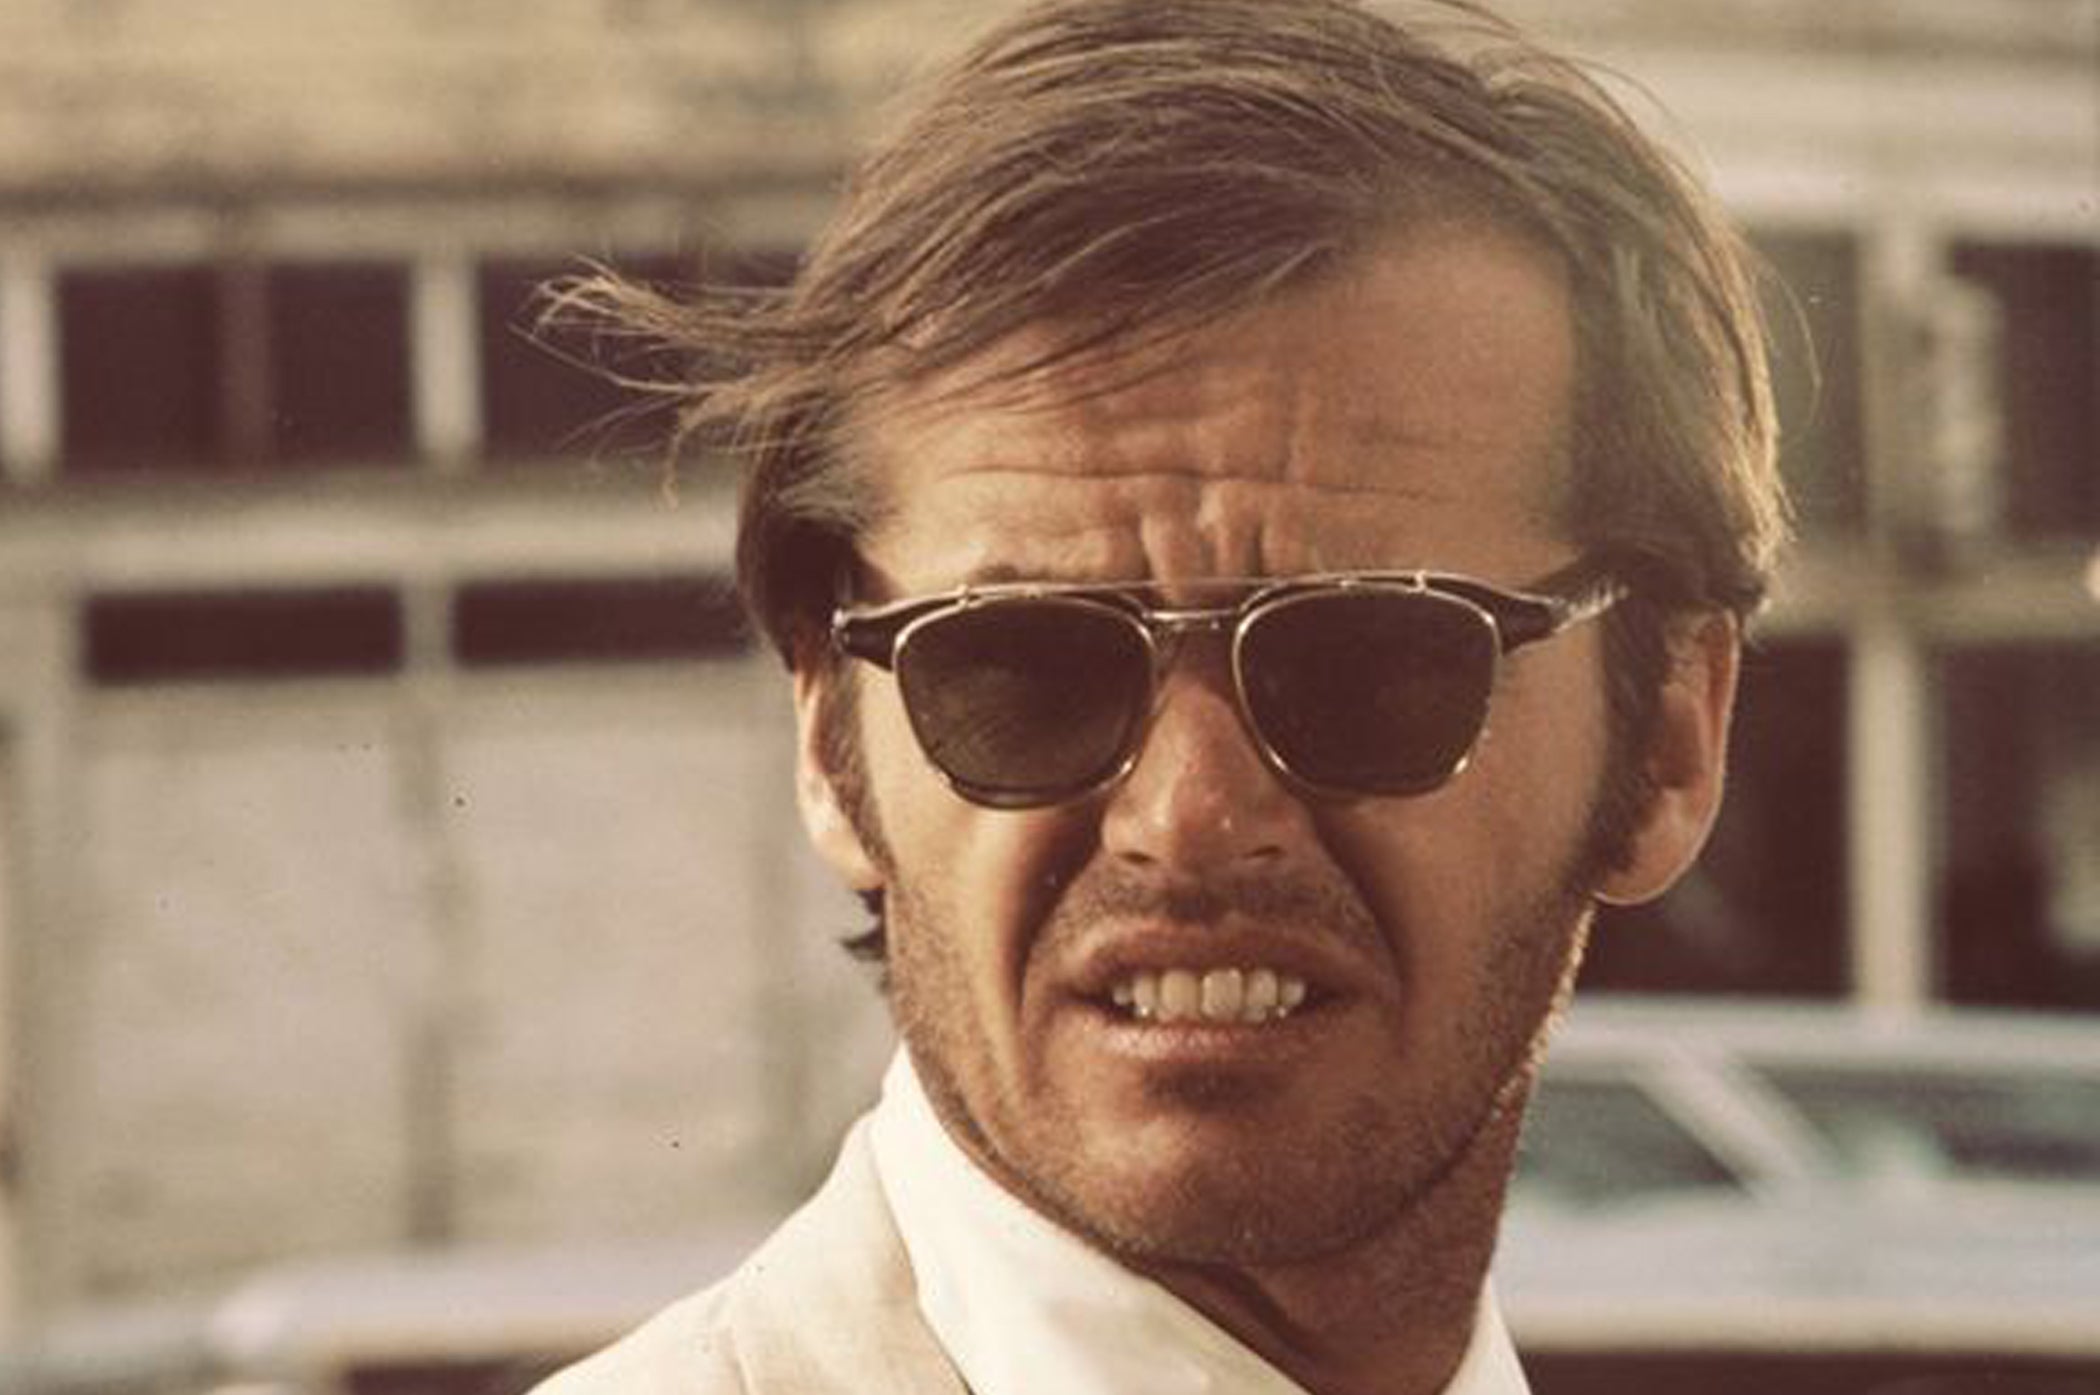 Sunglass Jack Is Jack Nicholson